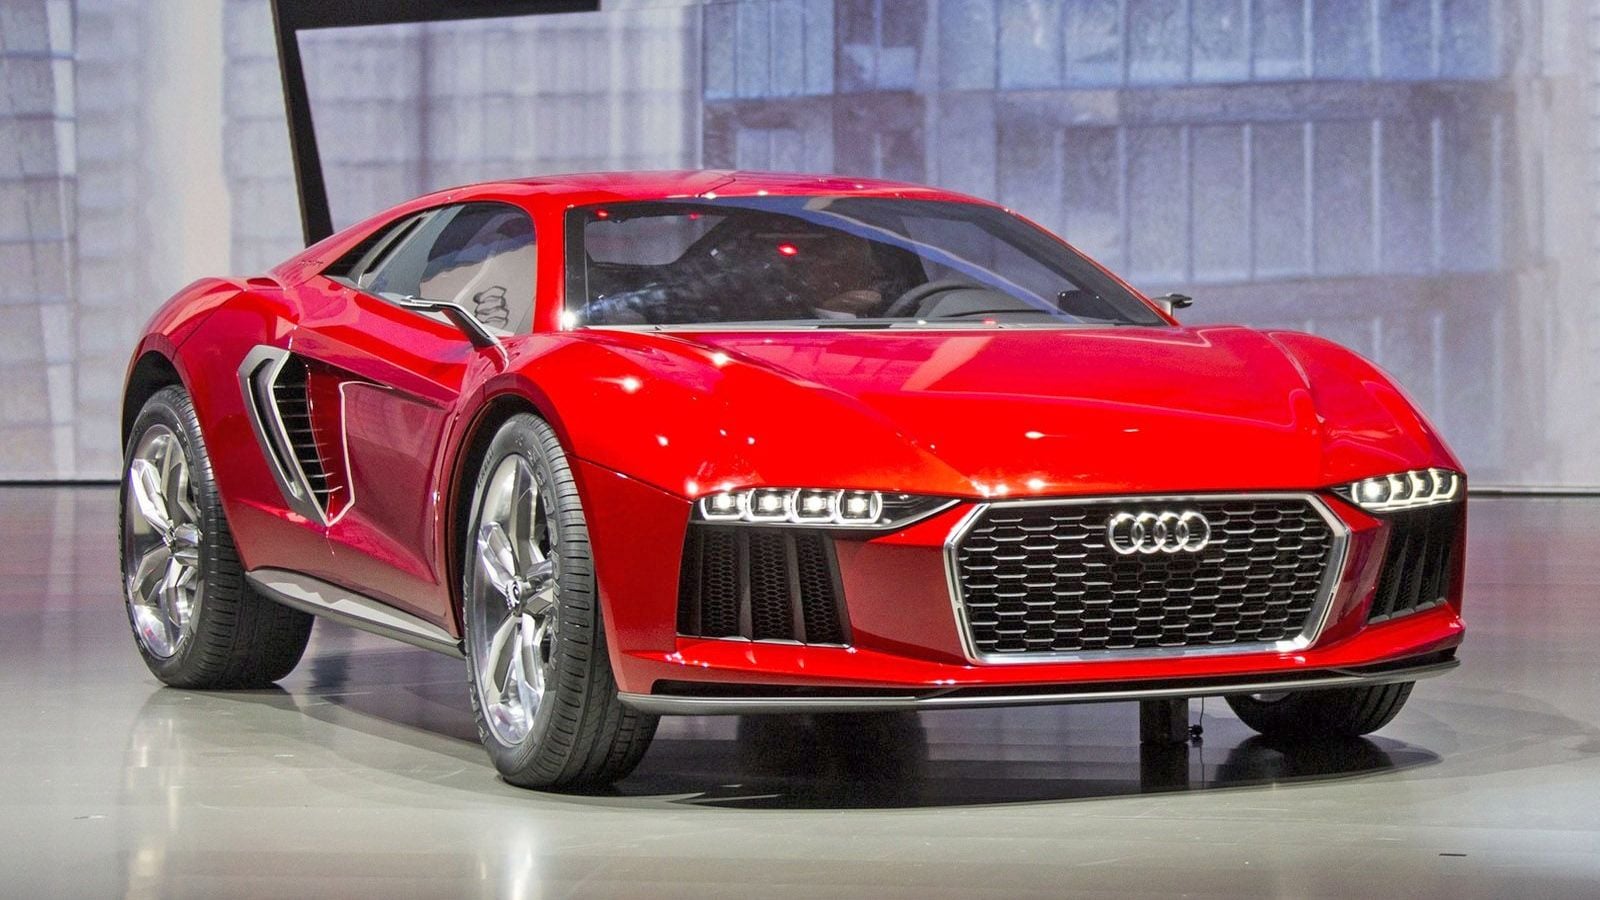 Hands Down the Best Audi Concept Cars So Far | Audiworld